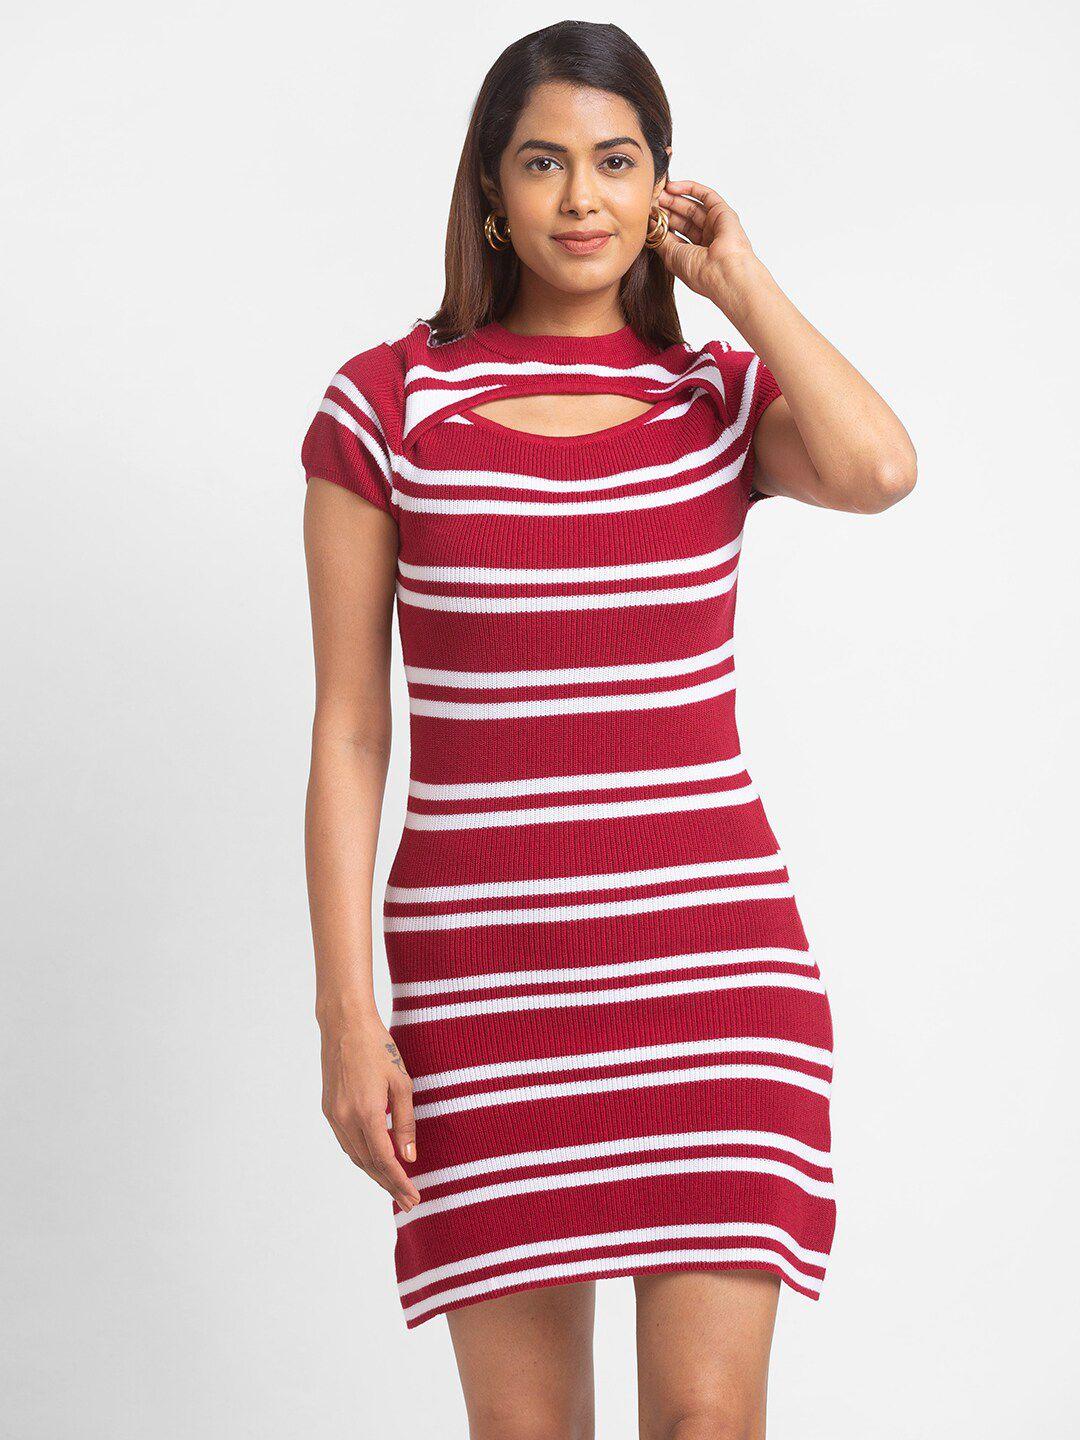 globus-red-&-white-striped-t-shirt-dress